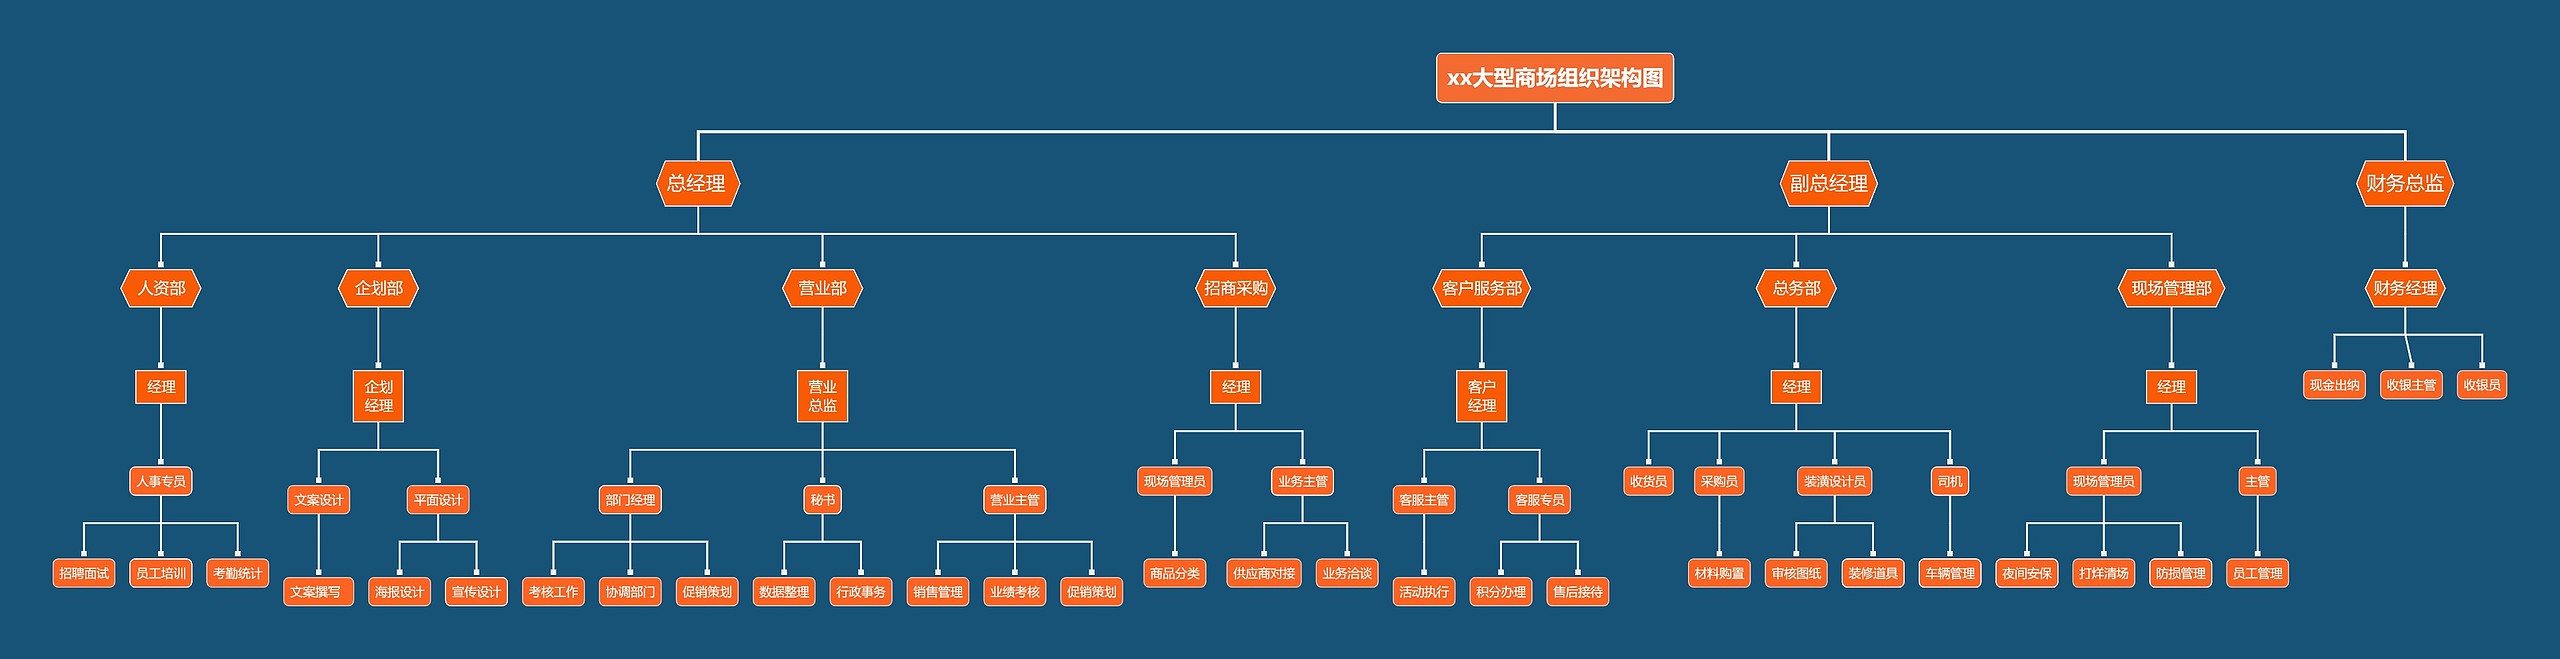 xx大型商场组织架构图